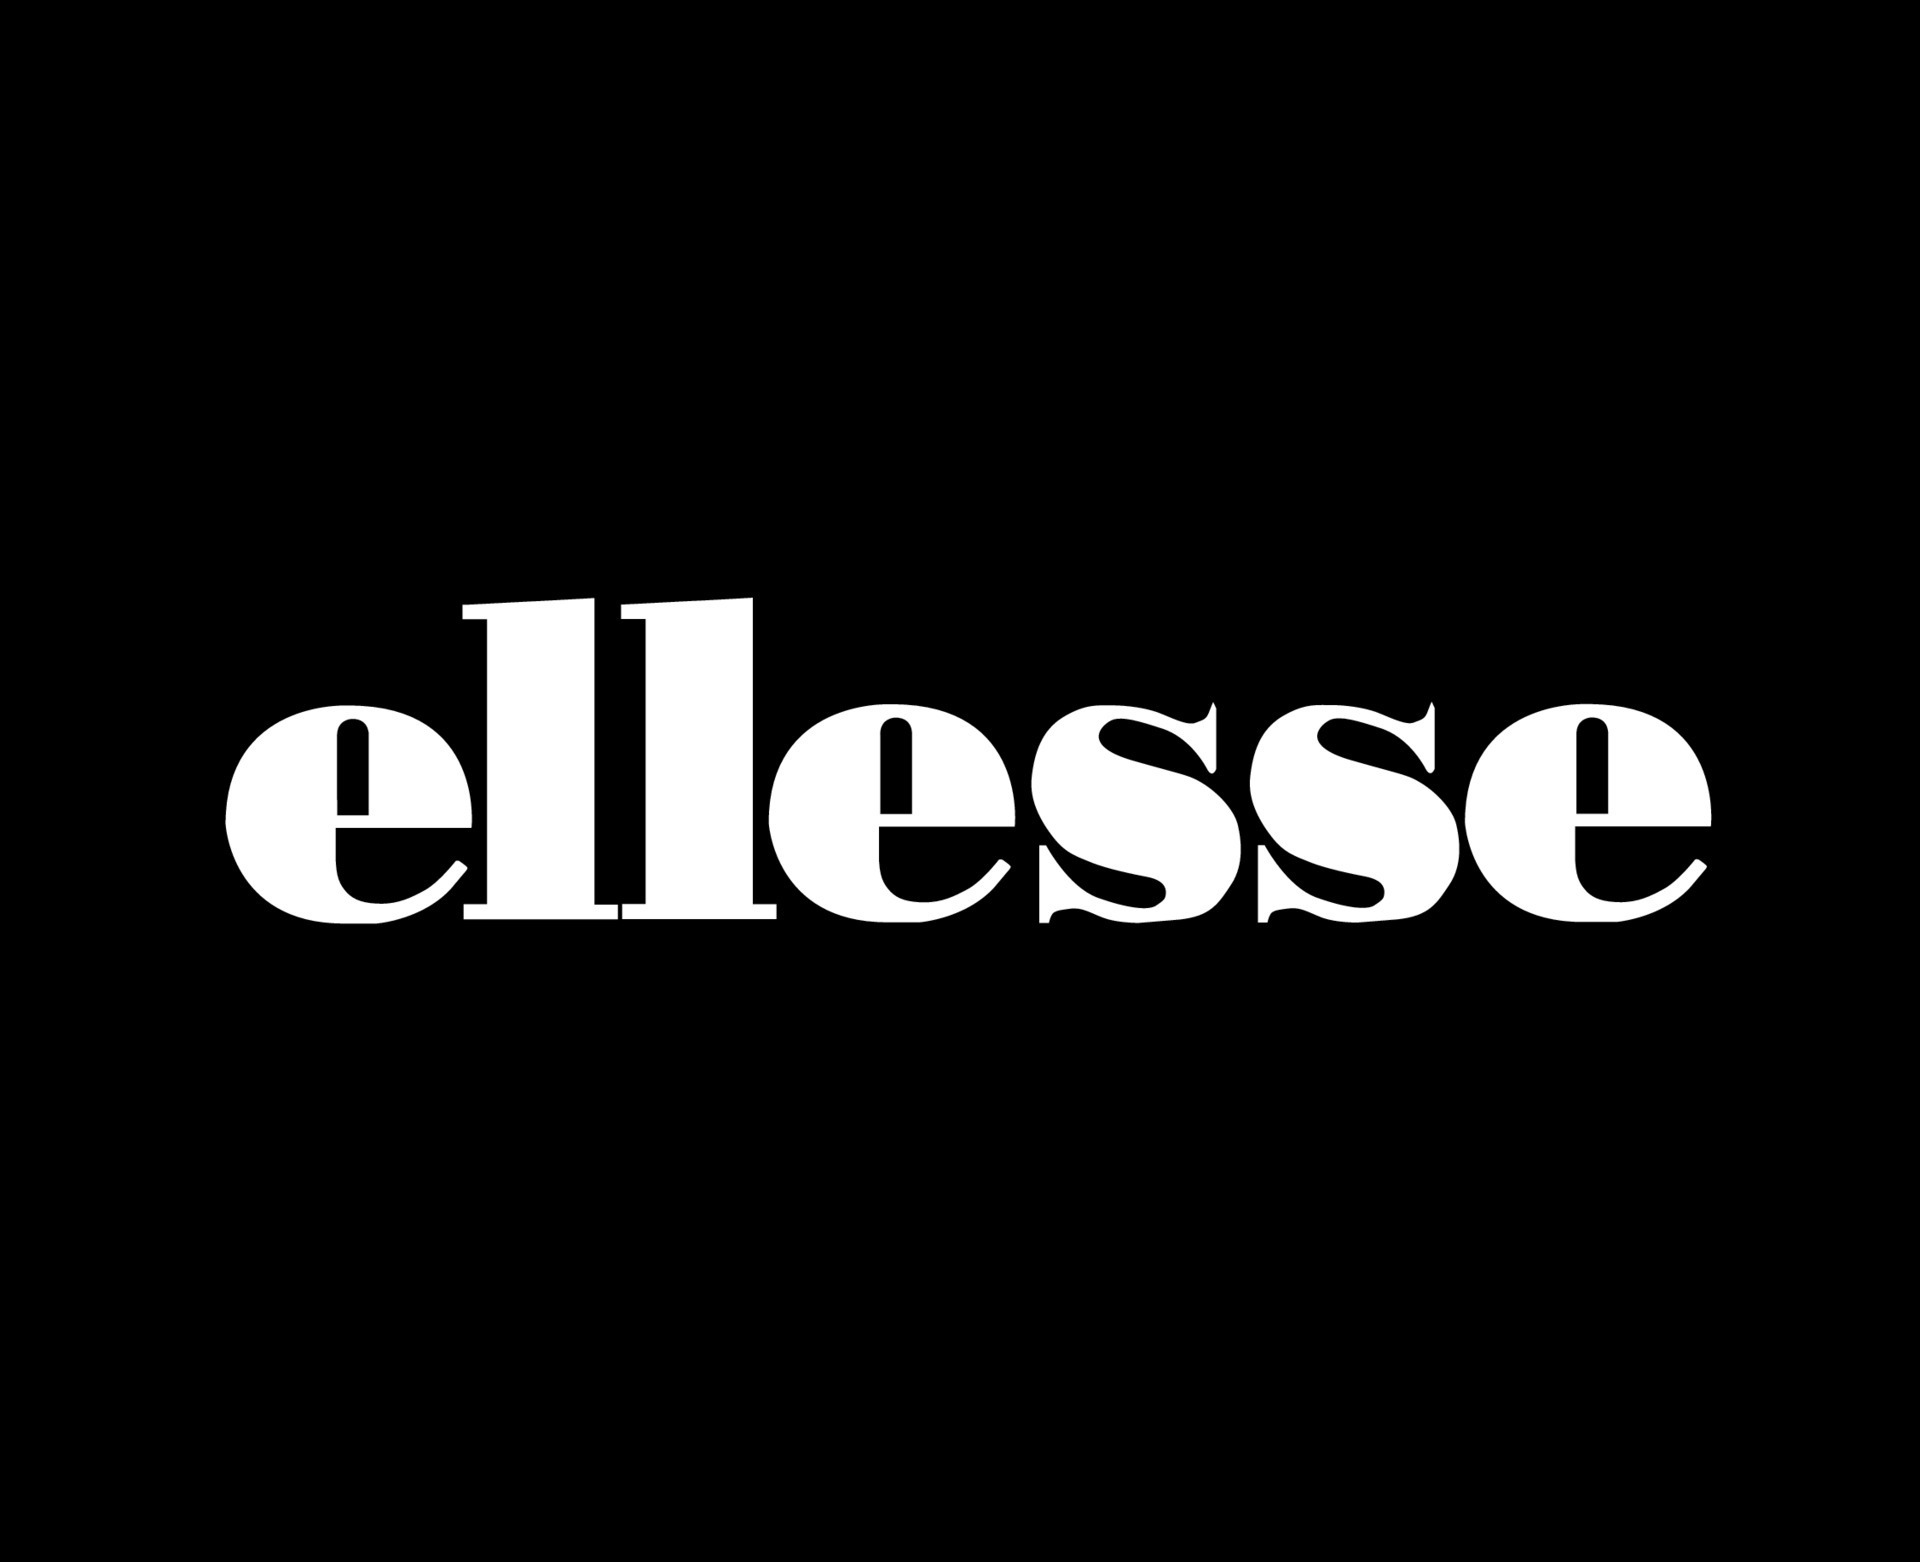 https://static.vecteezy.com/system/resources/previews/023/870/040/original/ellesse-brand-logo-name-white-symbol-design-clothes-fashion-illustration-with-black-background-free-vector.jpg